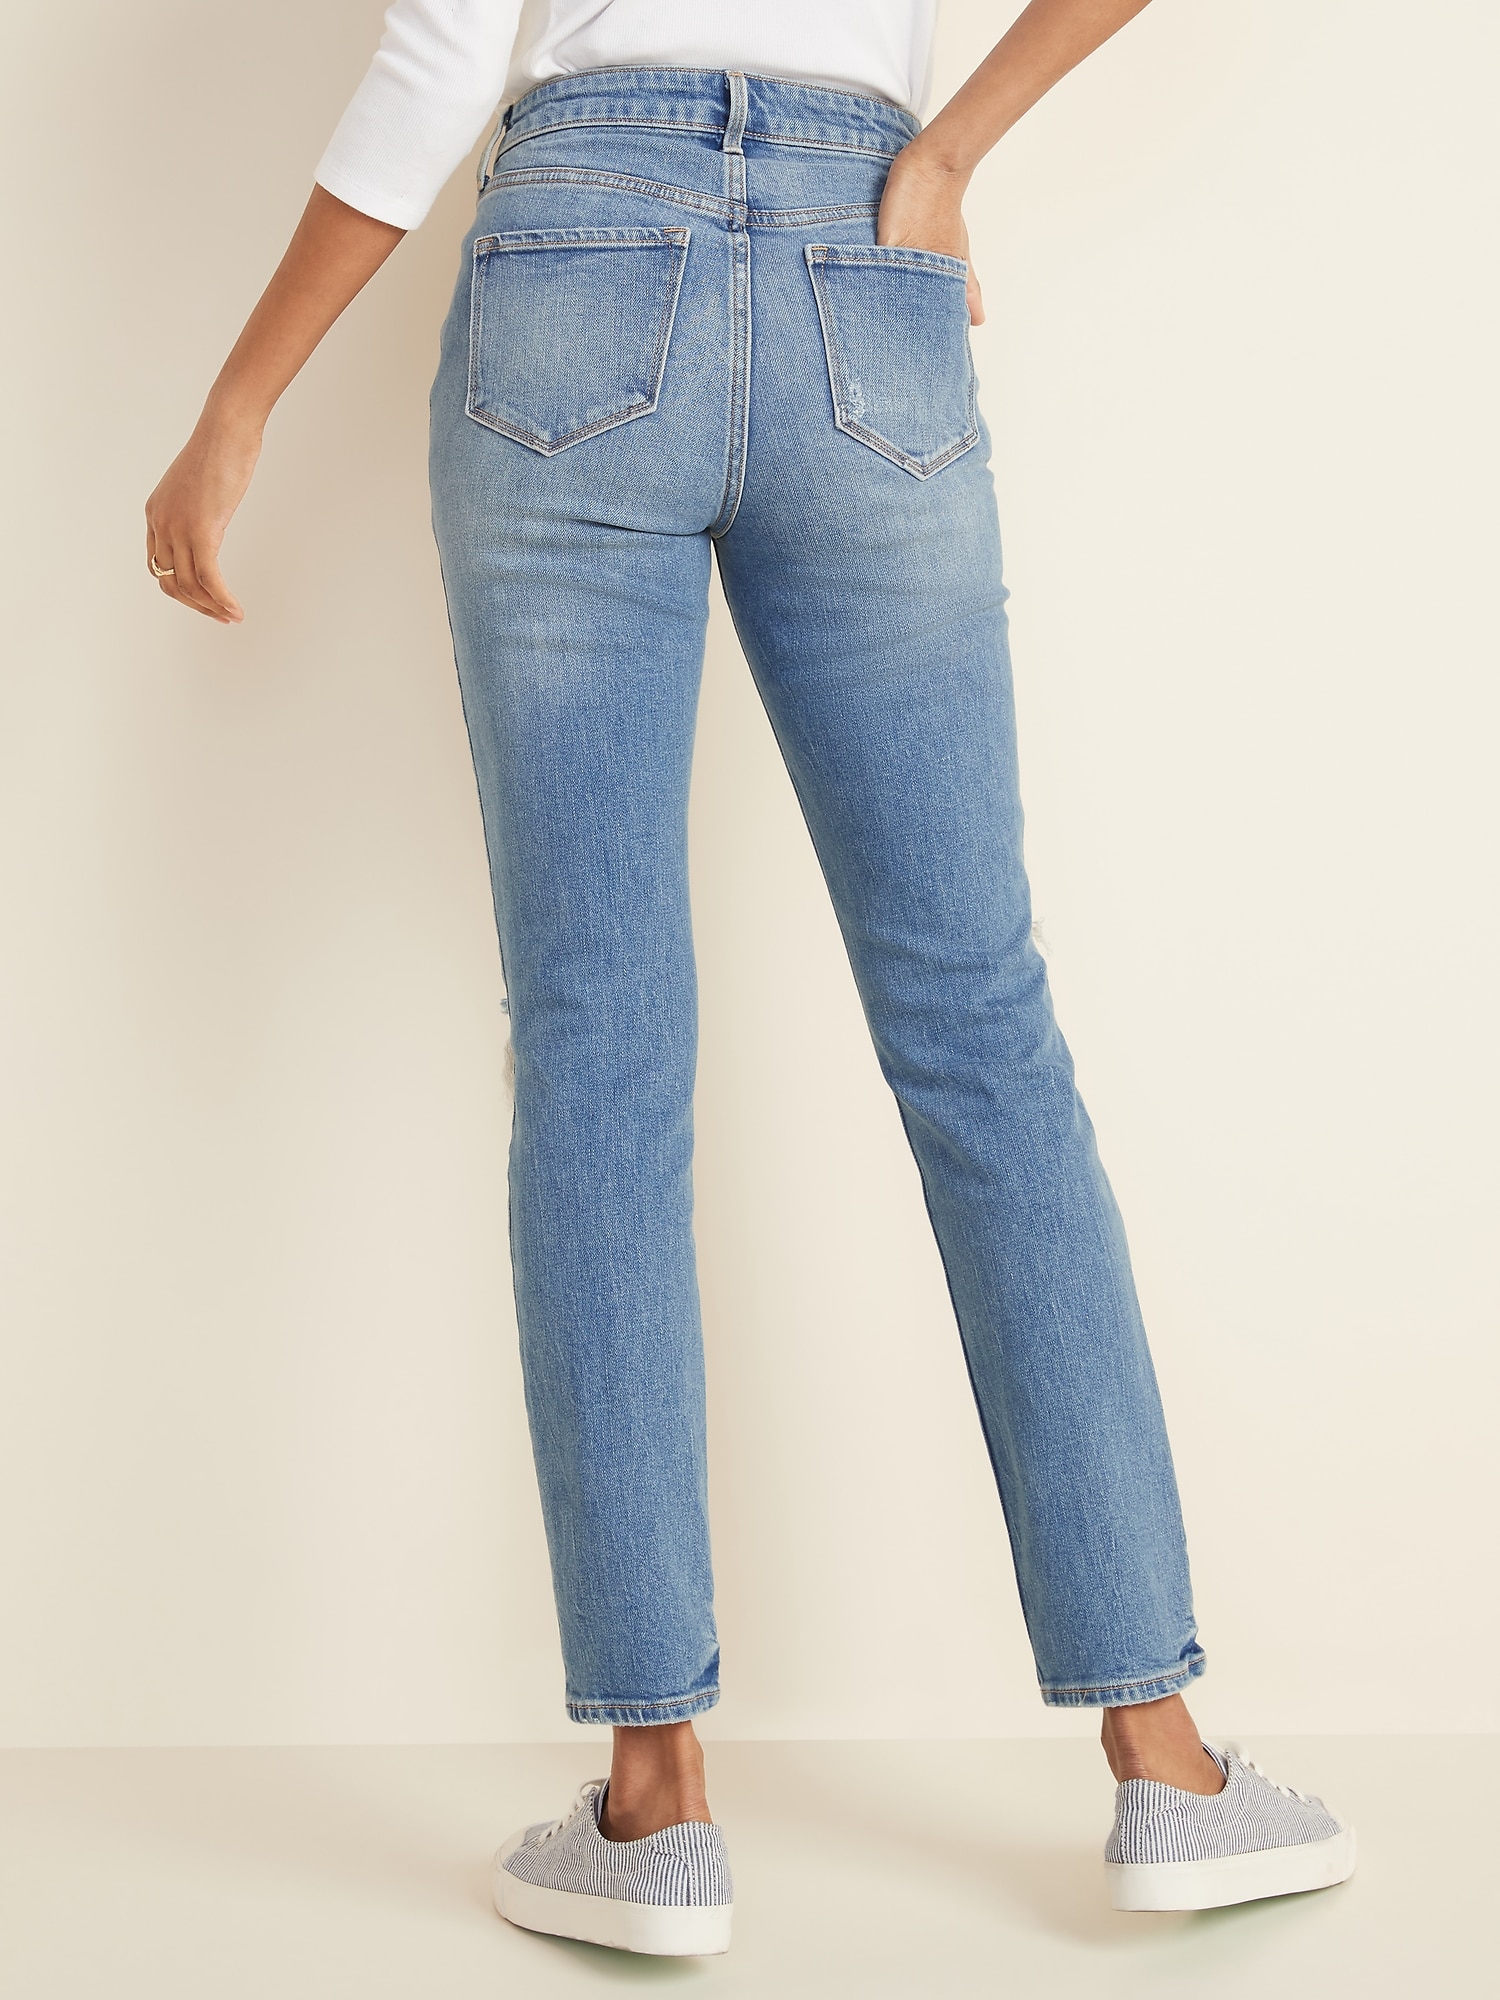 high rise slim jeans women's